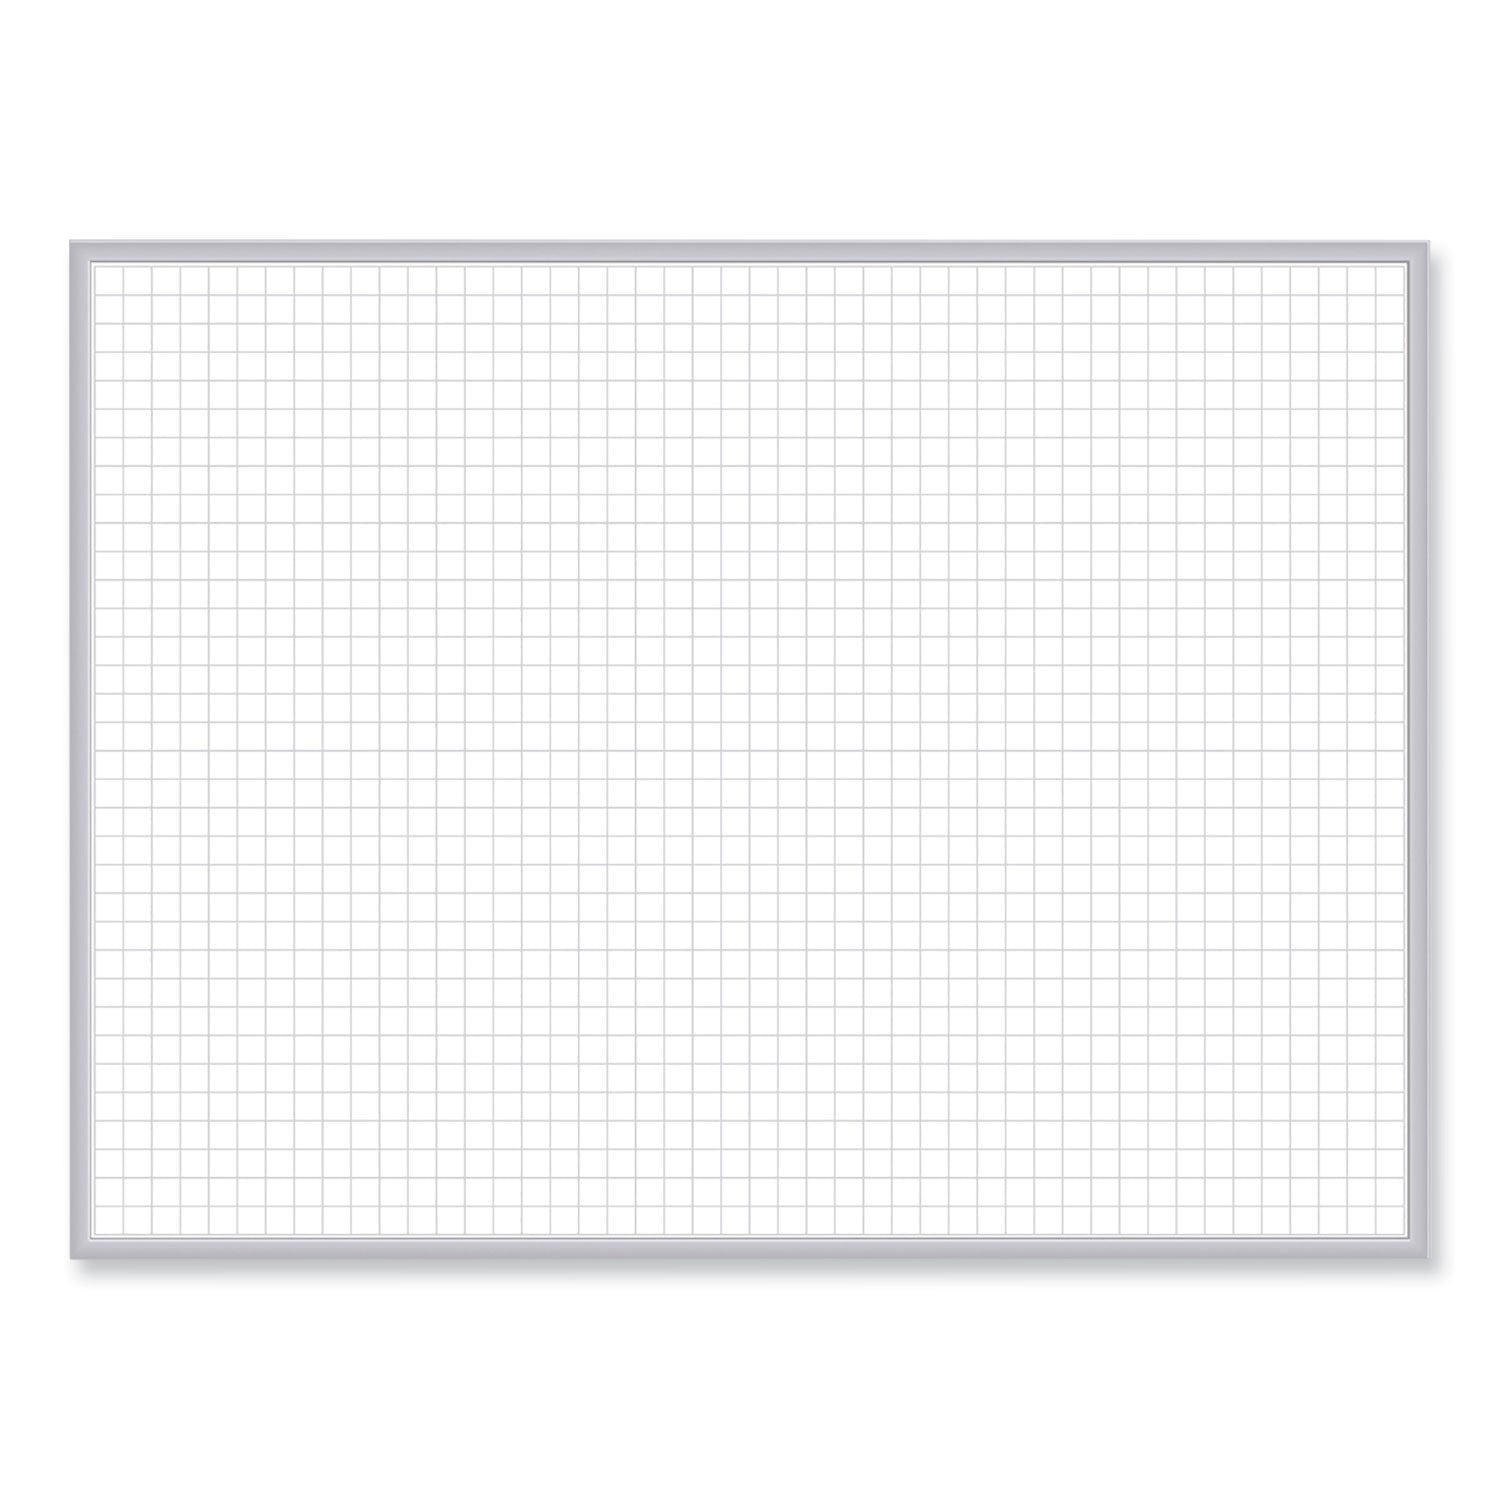 1-x-1-grid-magnetic-whiteboard-725-x-485-white-gray-surface-satin-aluminum-frame-ships-in-7-10-business-days_ghegrpm321g46 - 1